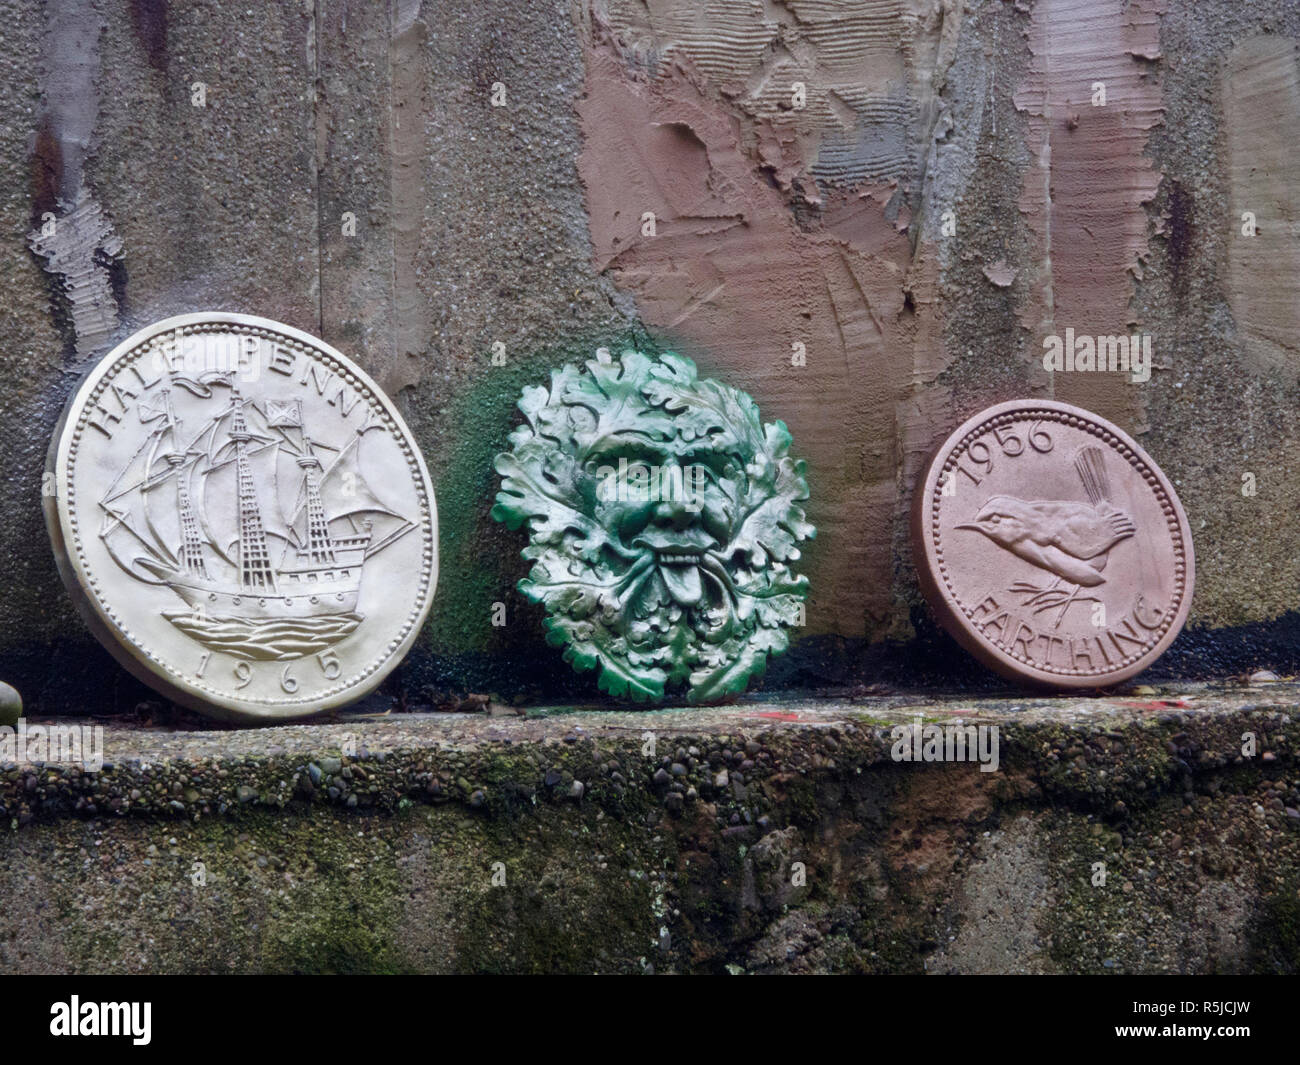 Green Man Deity Plaque & Large Replica British Half Penny & Farthing Coins, UK Stock Photo